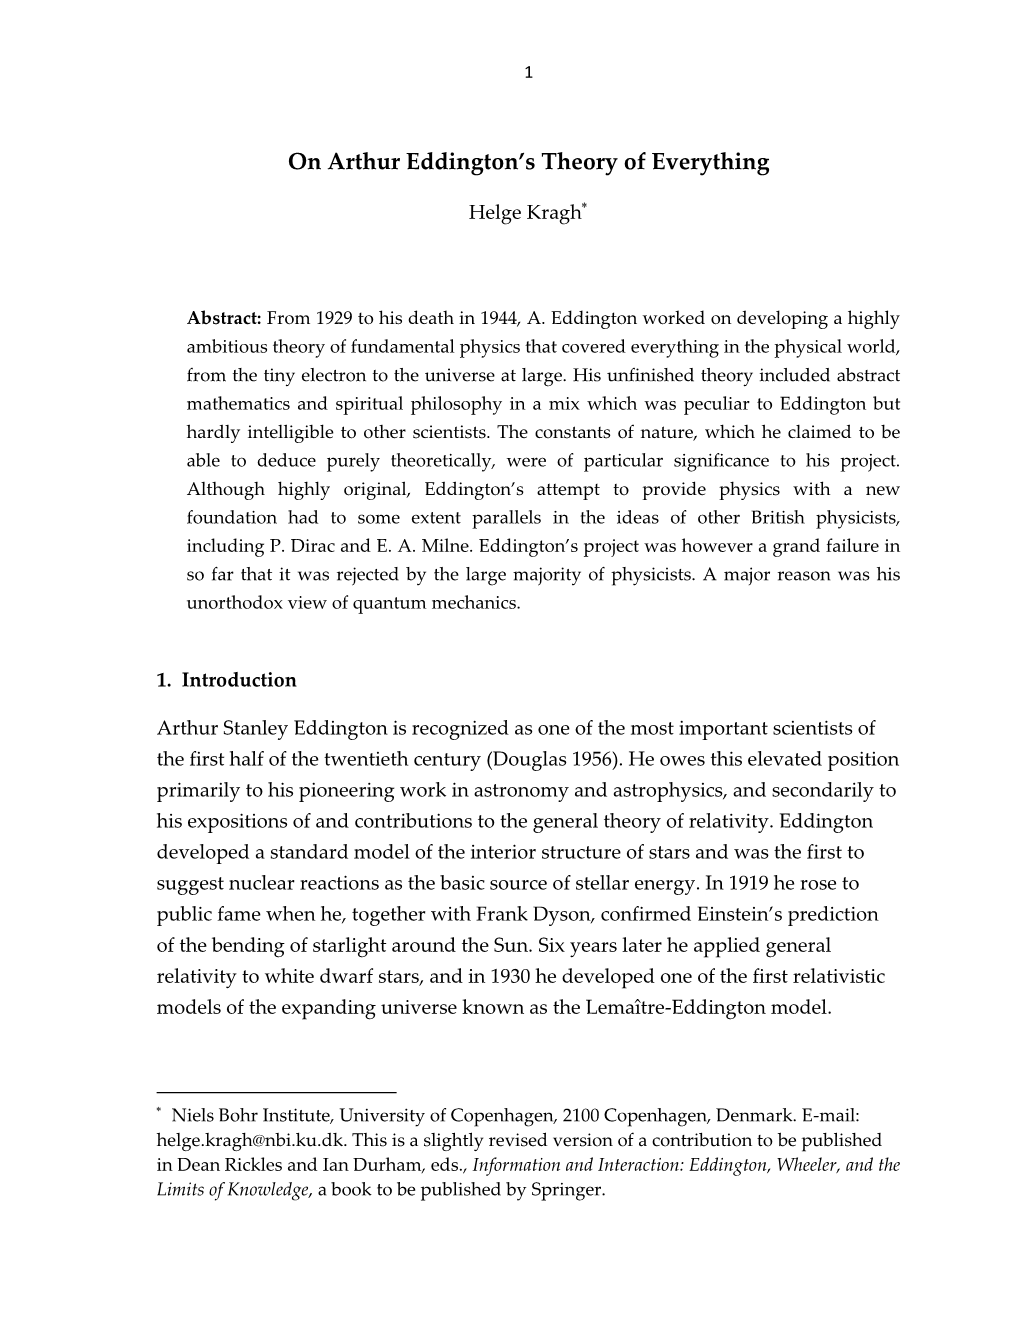 On Arthur Eddington's Theory of Everything